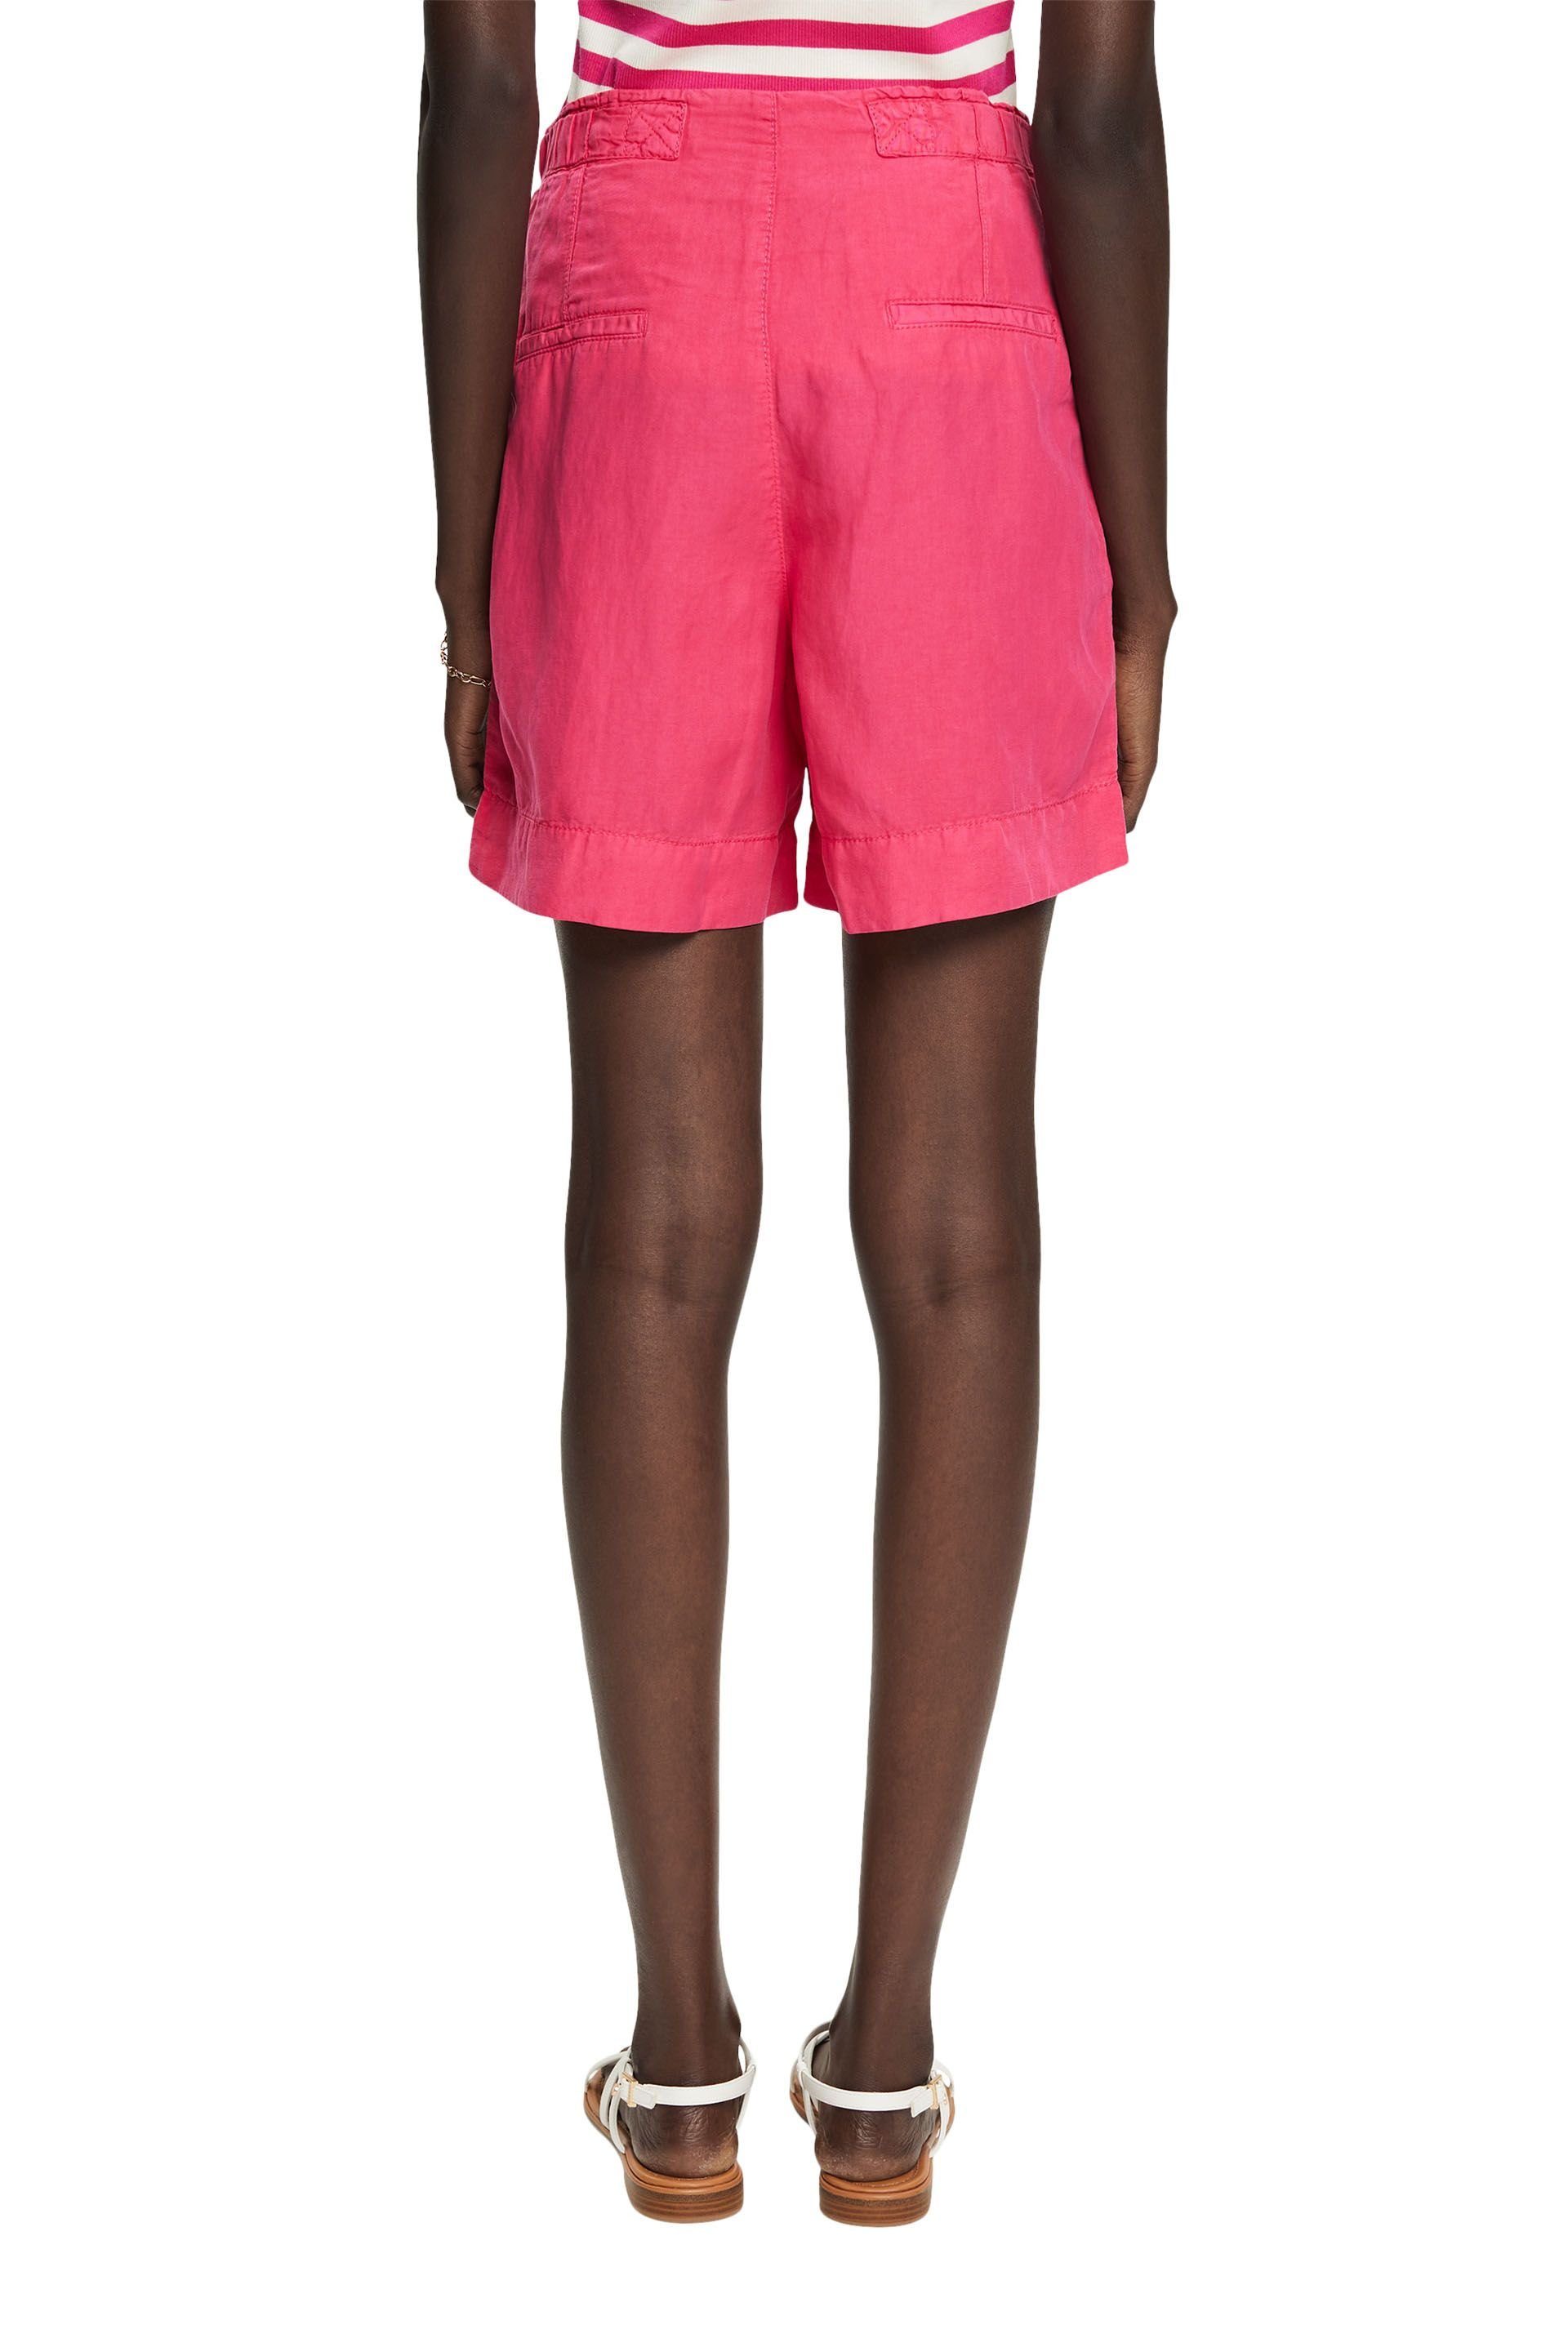 fuchsia Esprit Shorts pink